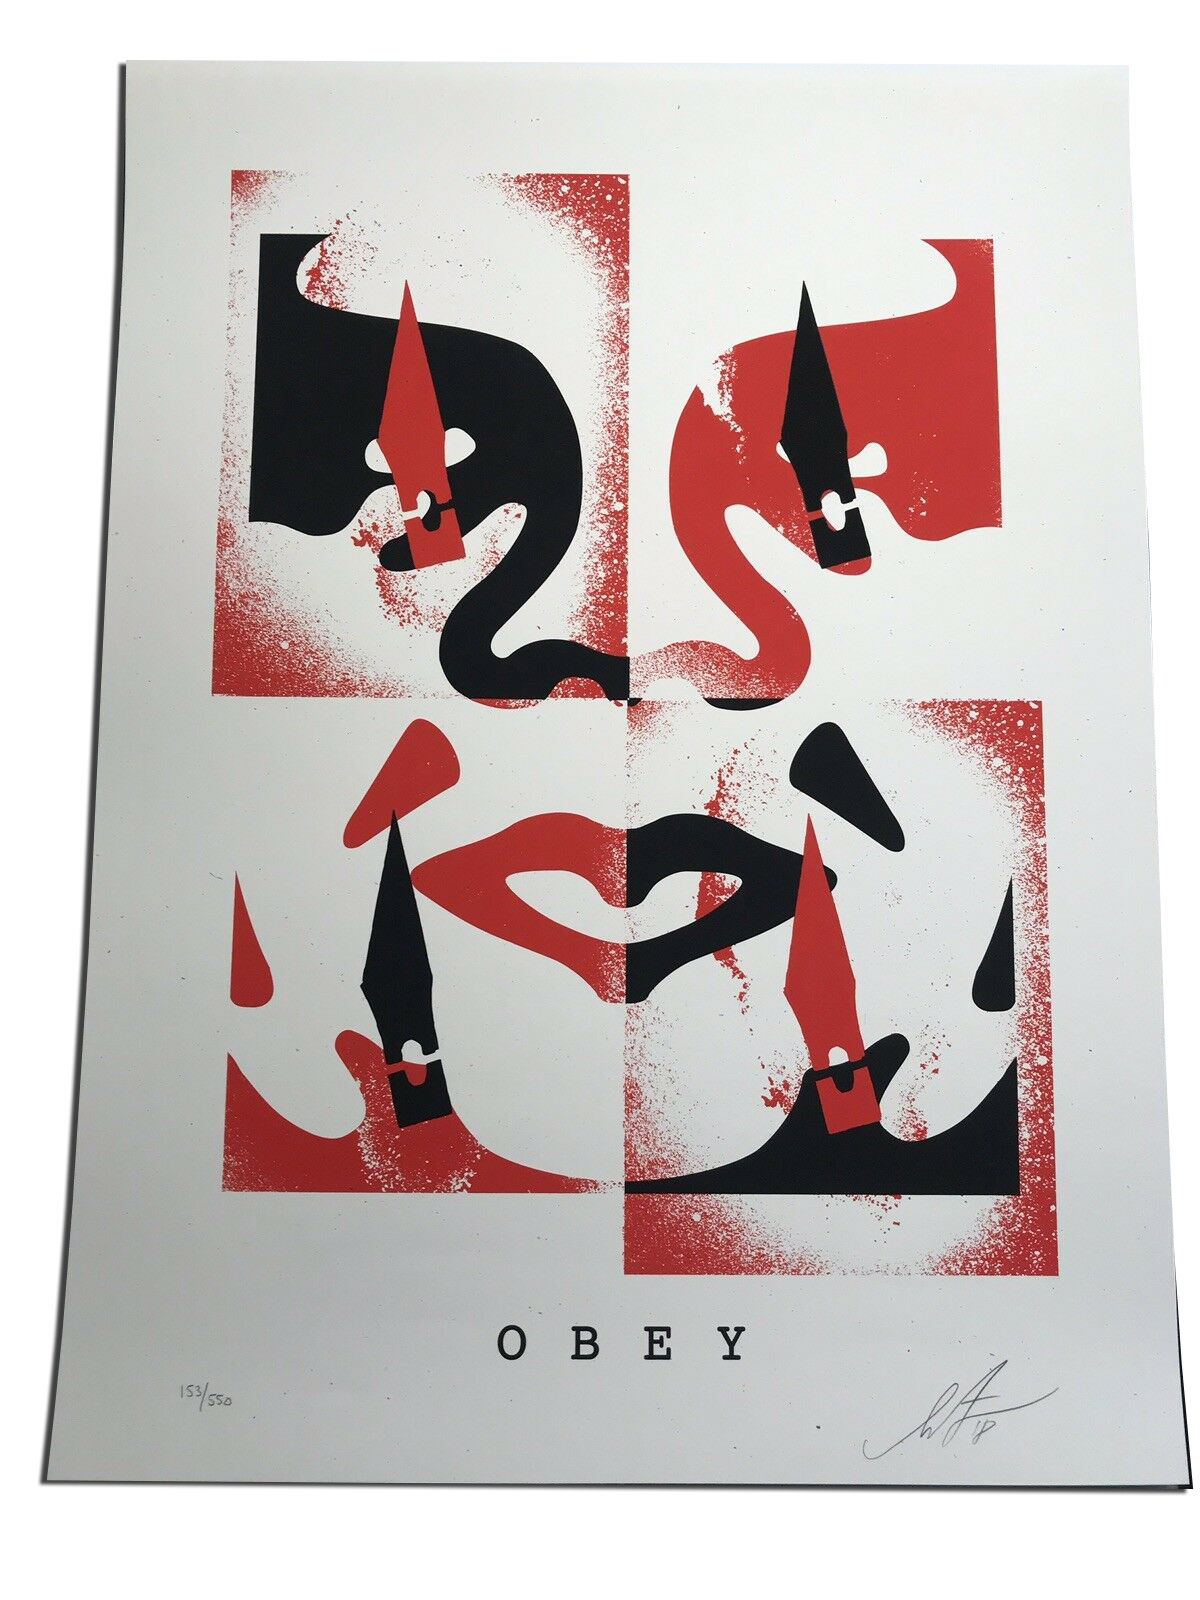 obey stencil print out